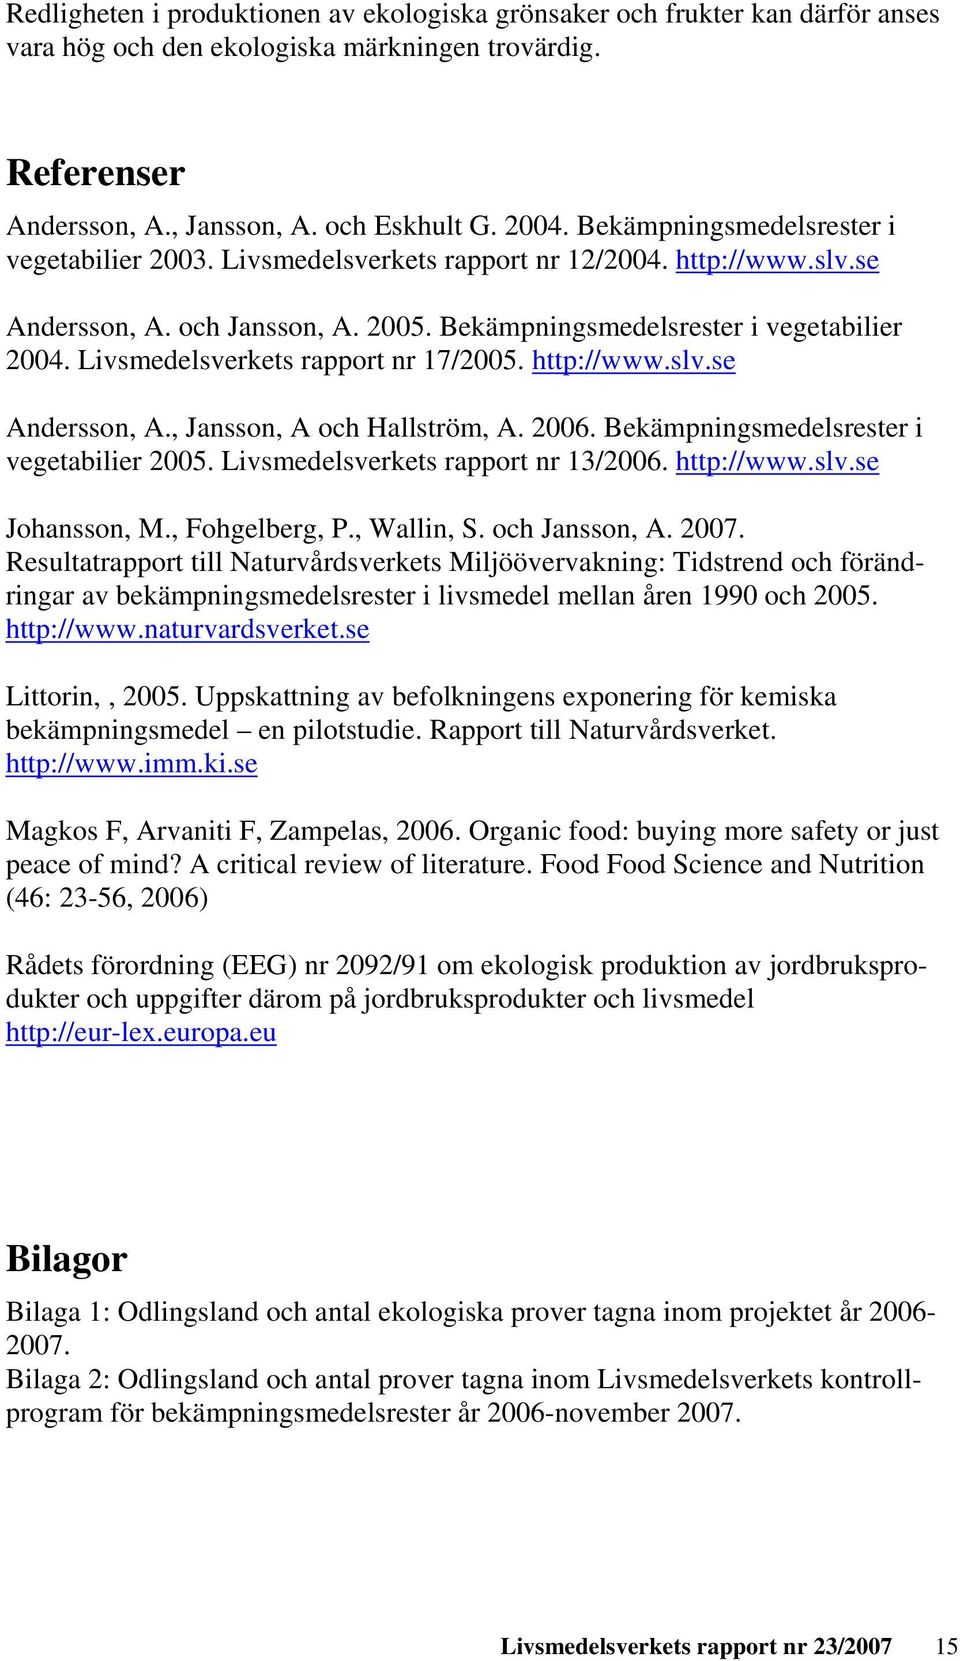 Livsmedelsverkets rapport nr 7/2005. http://www.slv.se Andersson, A., Jansson, A och Hallström, A. 2006. Bekämpningsmedelsrester i vegetabilier 2005. Livsmedelsverkets rapport nr 3/2006. http://www.slv.se Johansson, M.